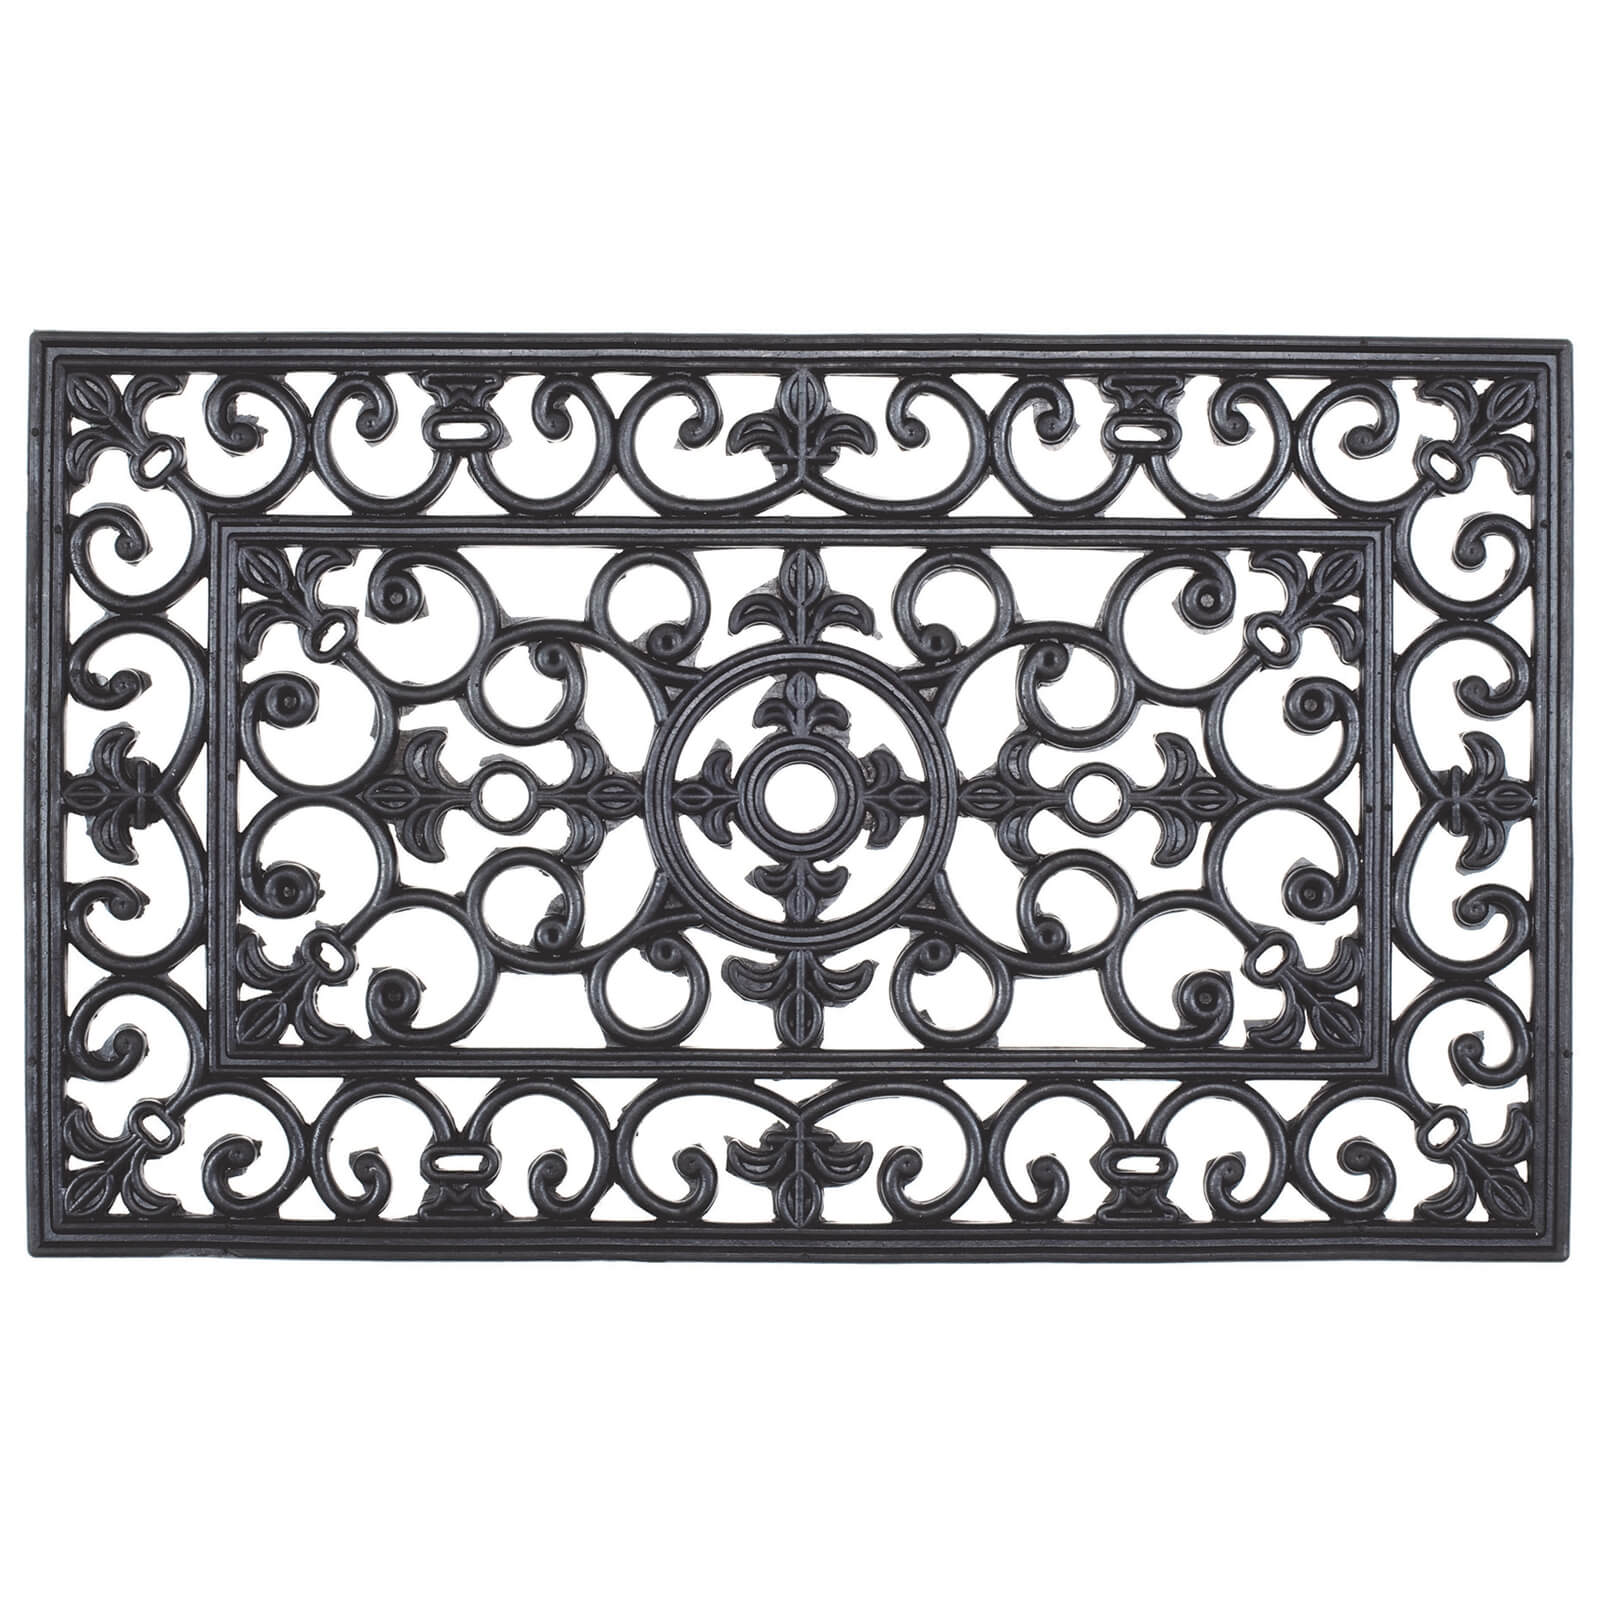 Photo of Wrought Iron Effect Rectangle Doormat -black